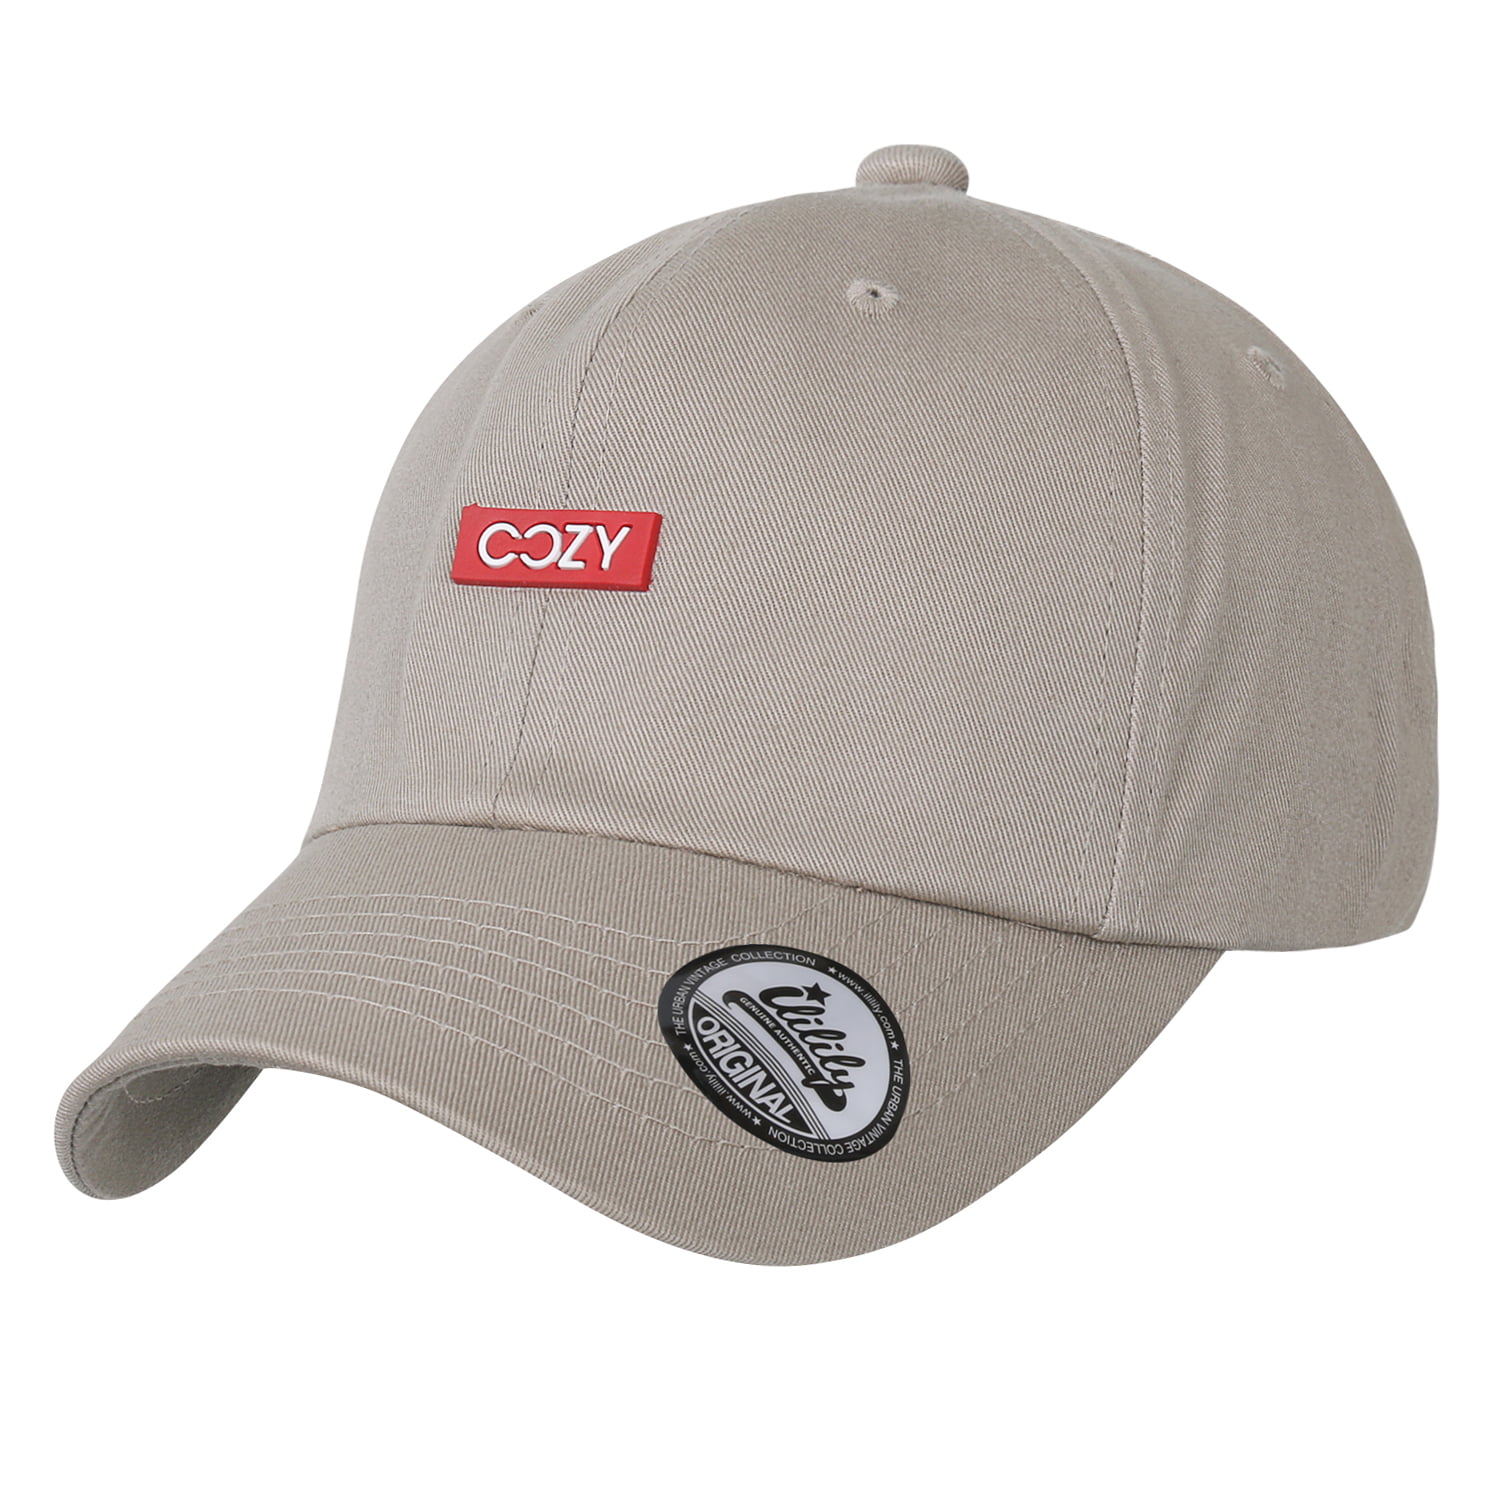 Unisex Outdoor Cap Baseball Plugra-Butter-Snapback Cotton Hat Wash